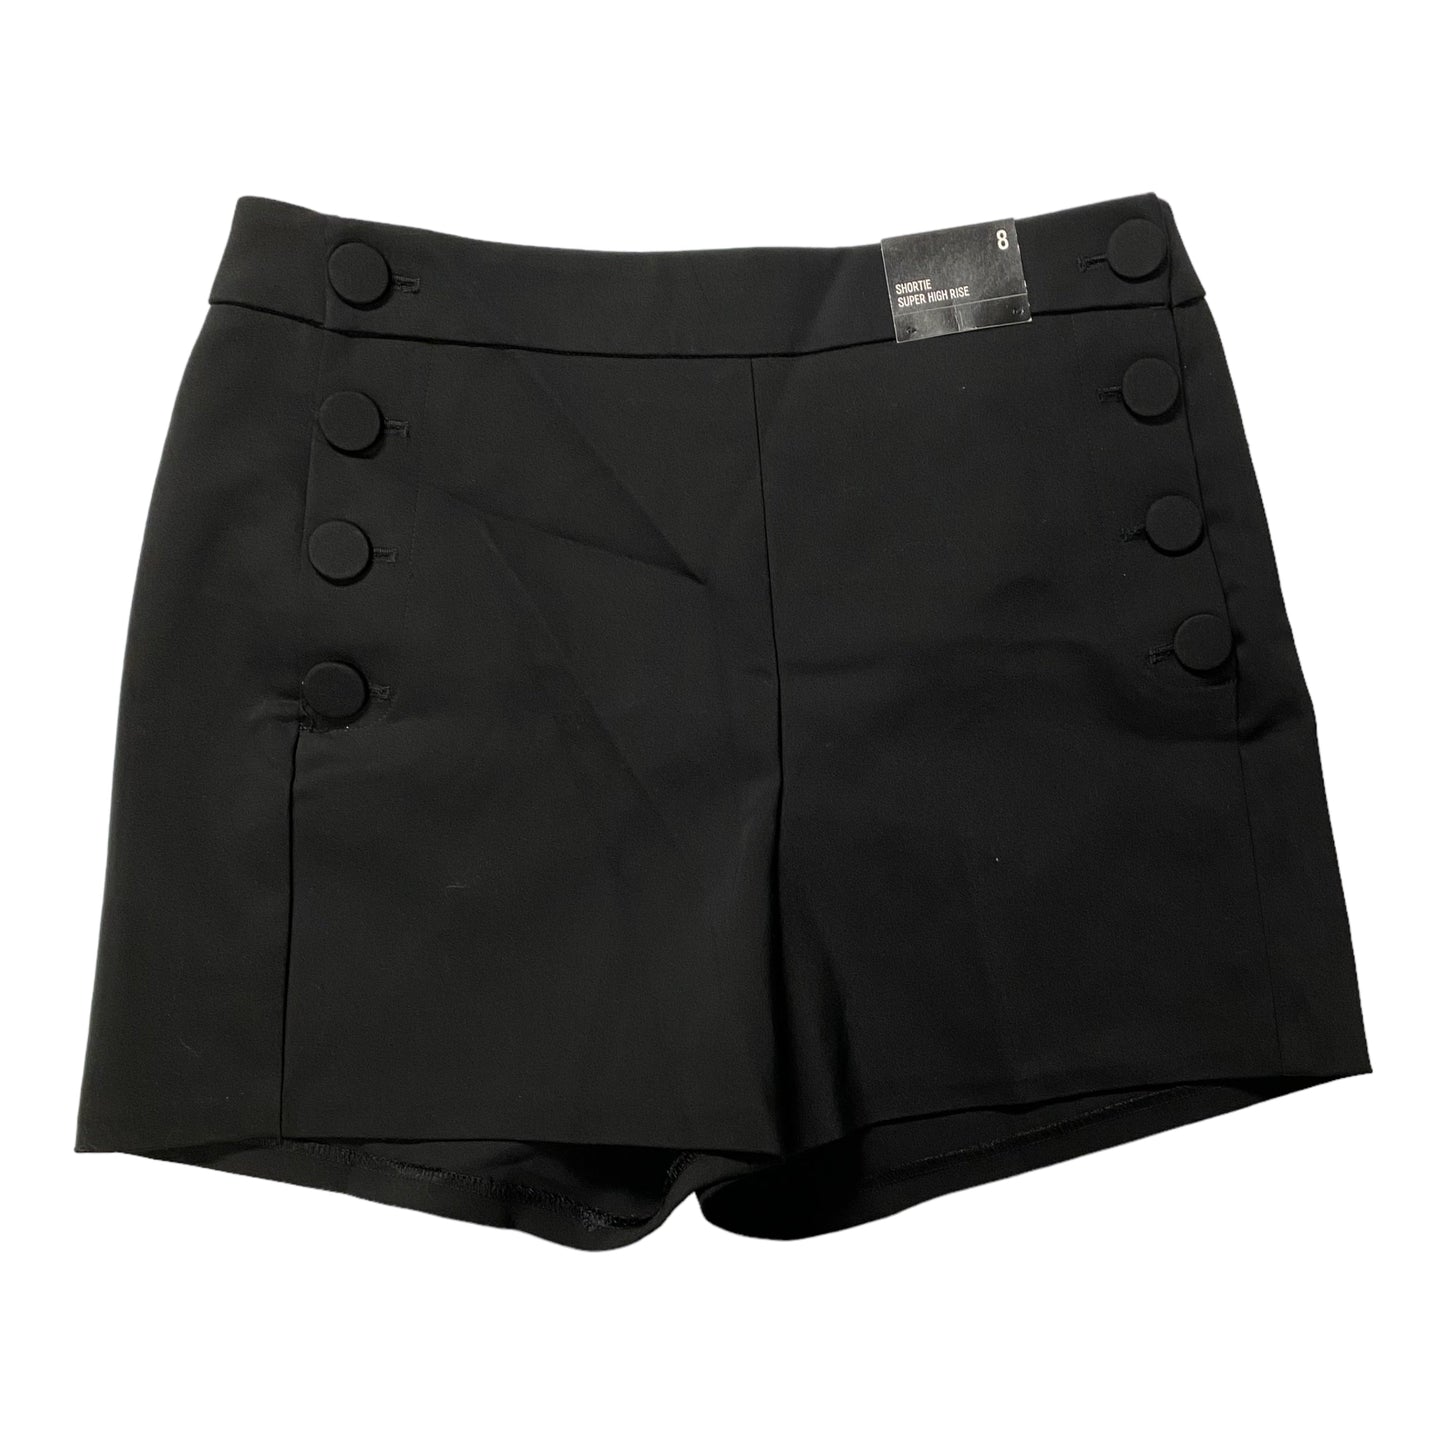 Black Shorts Express, Size 8